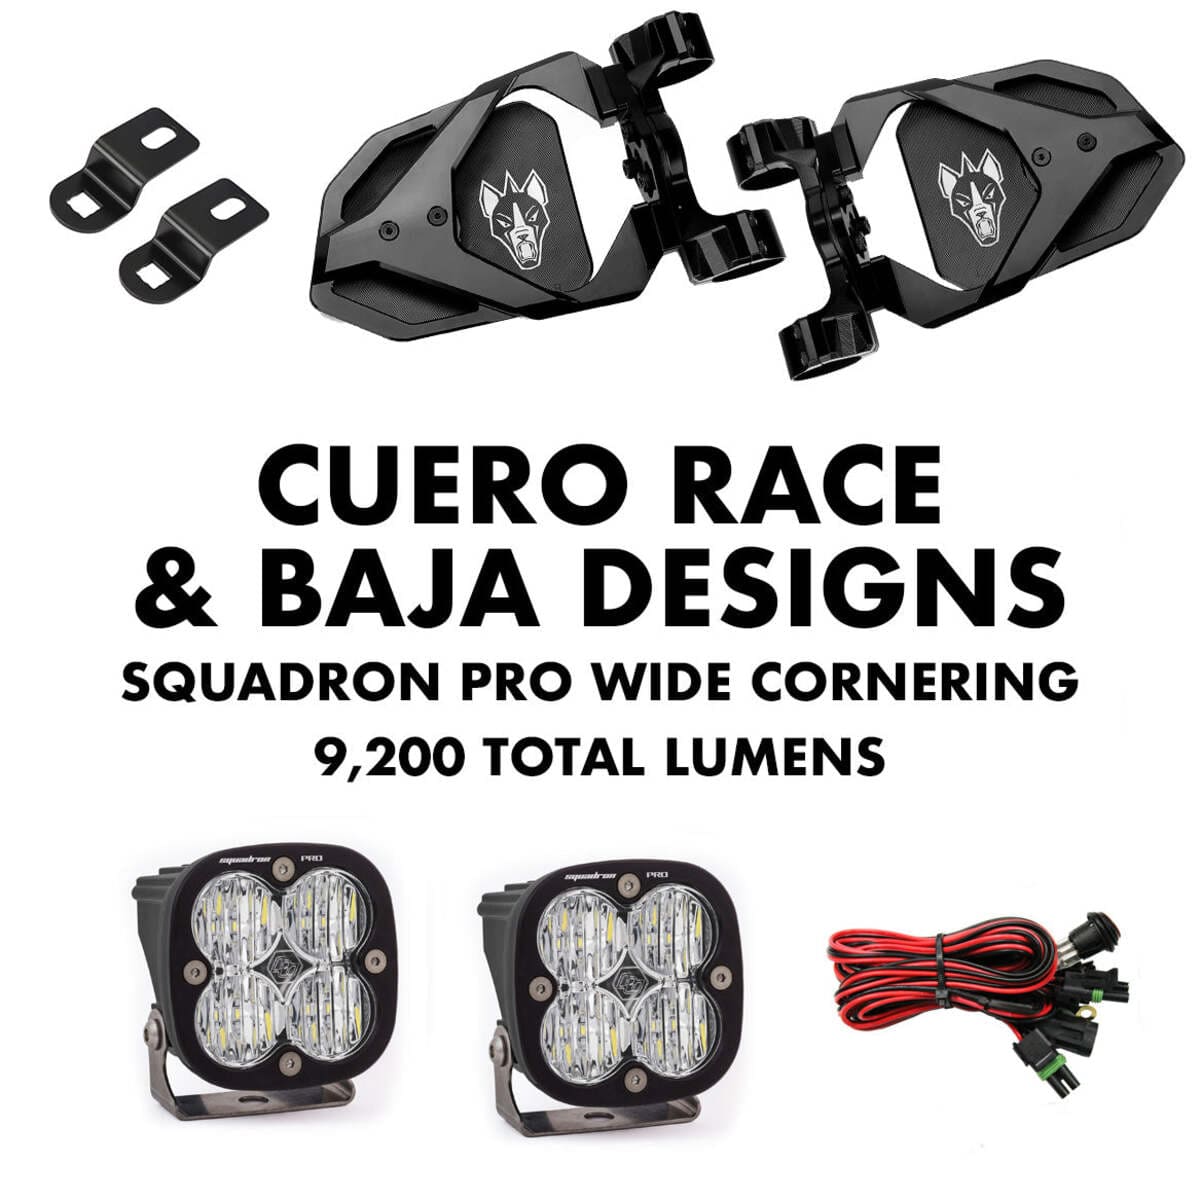 Chupacabra Offroad Cuero Race Mirror Light Combo in Black